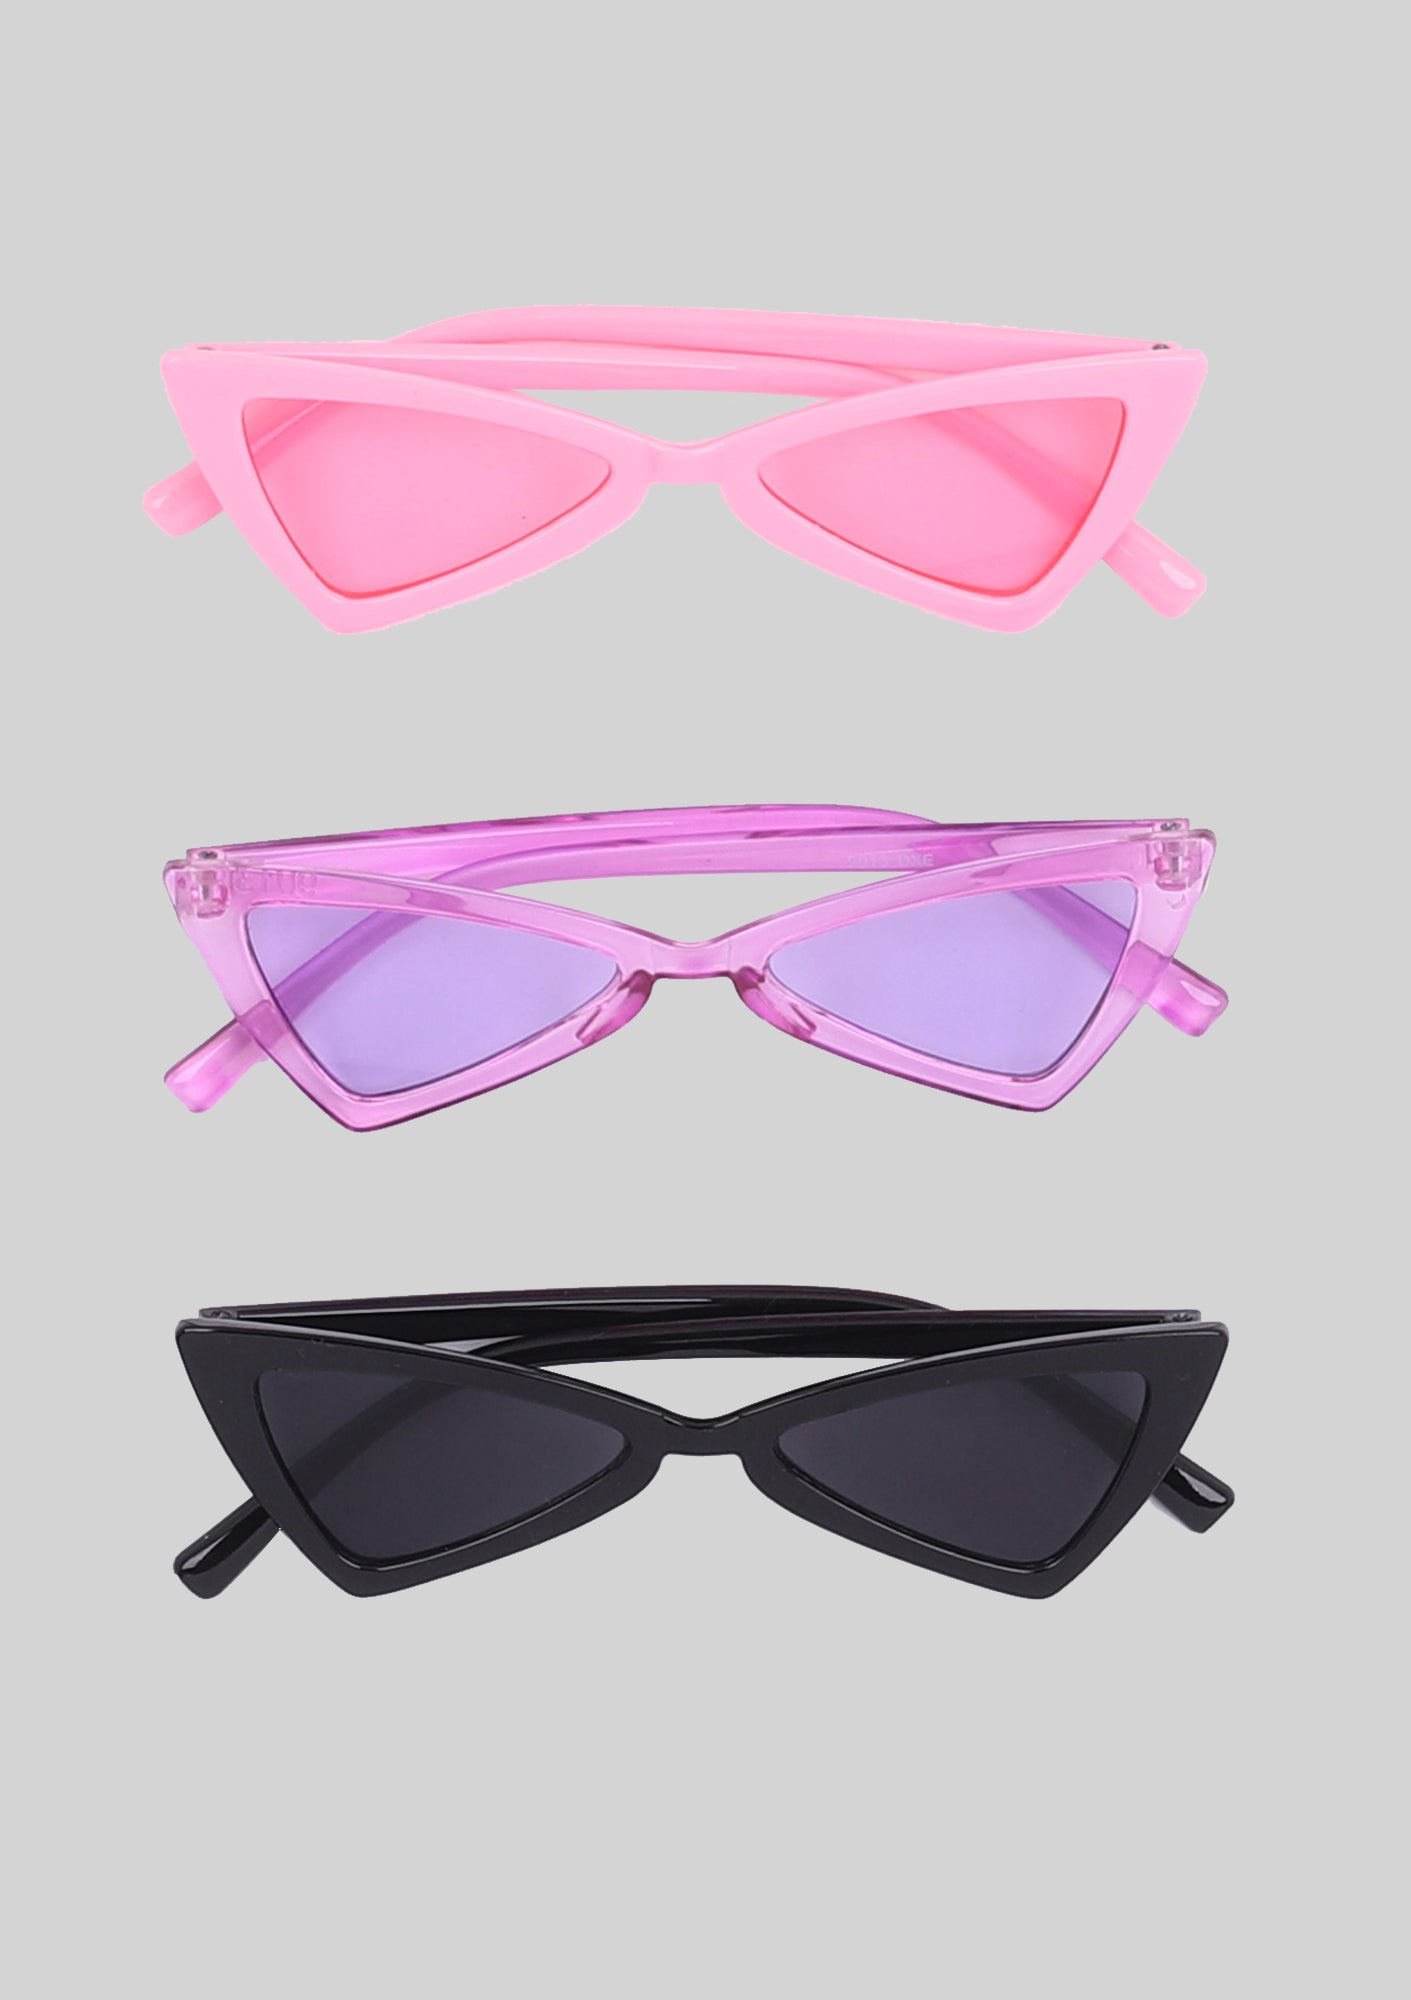 Black Triangular Sunglasses